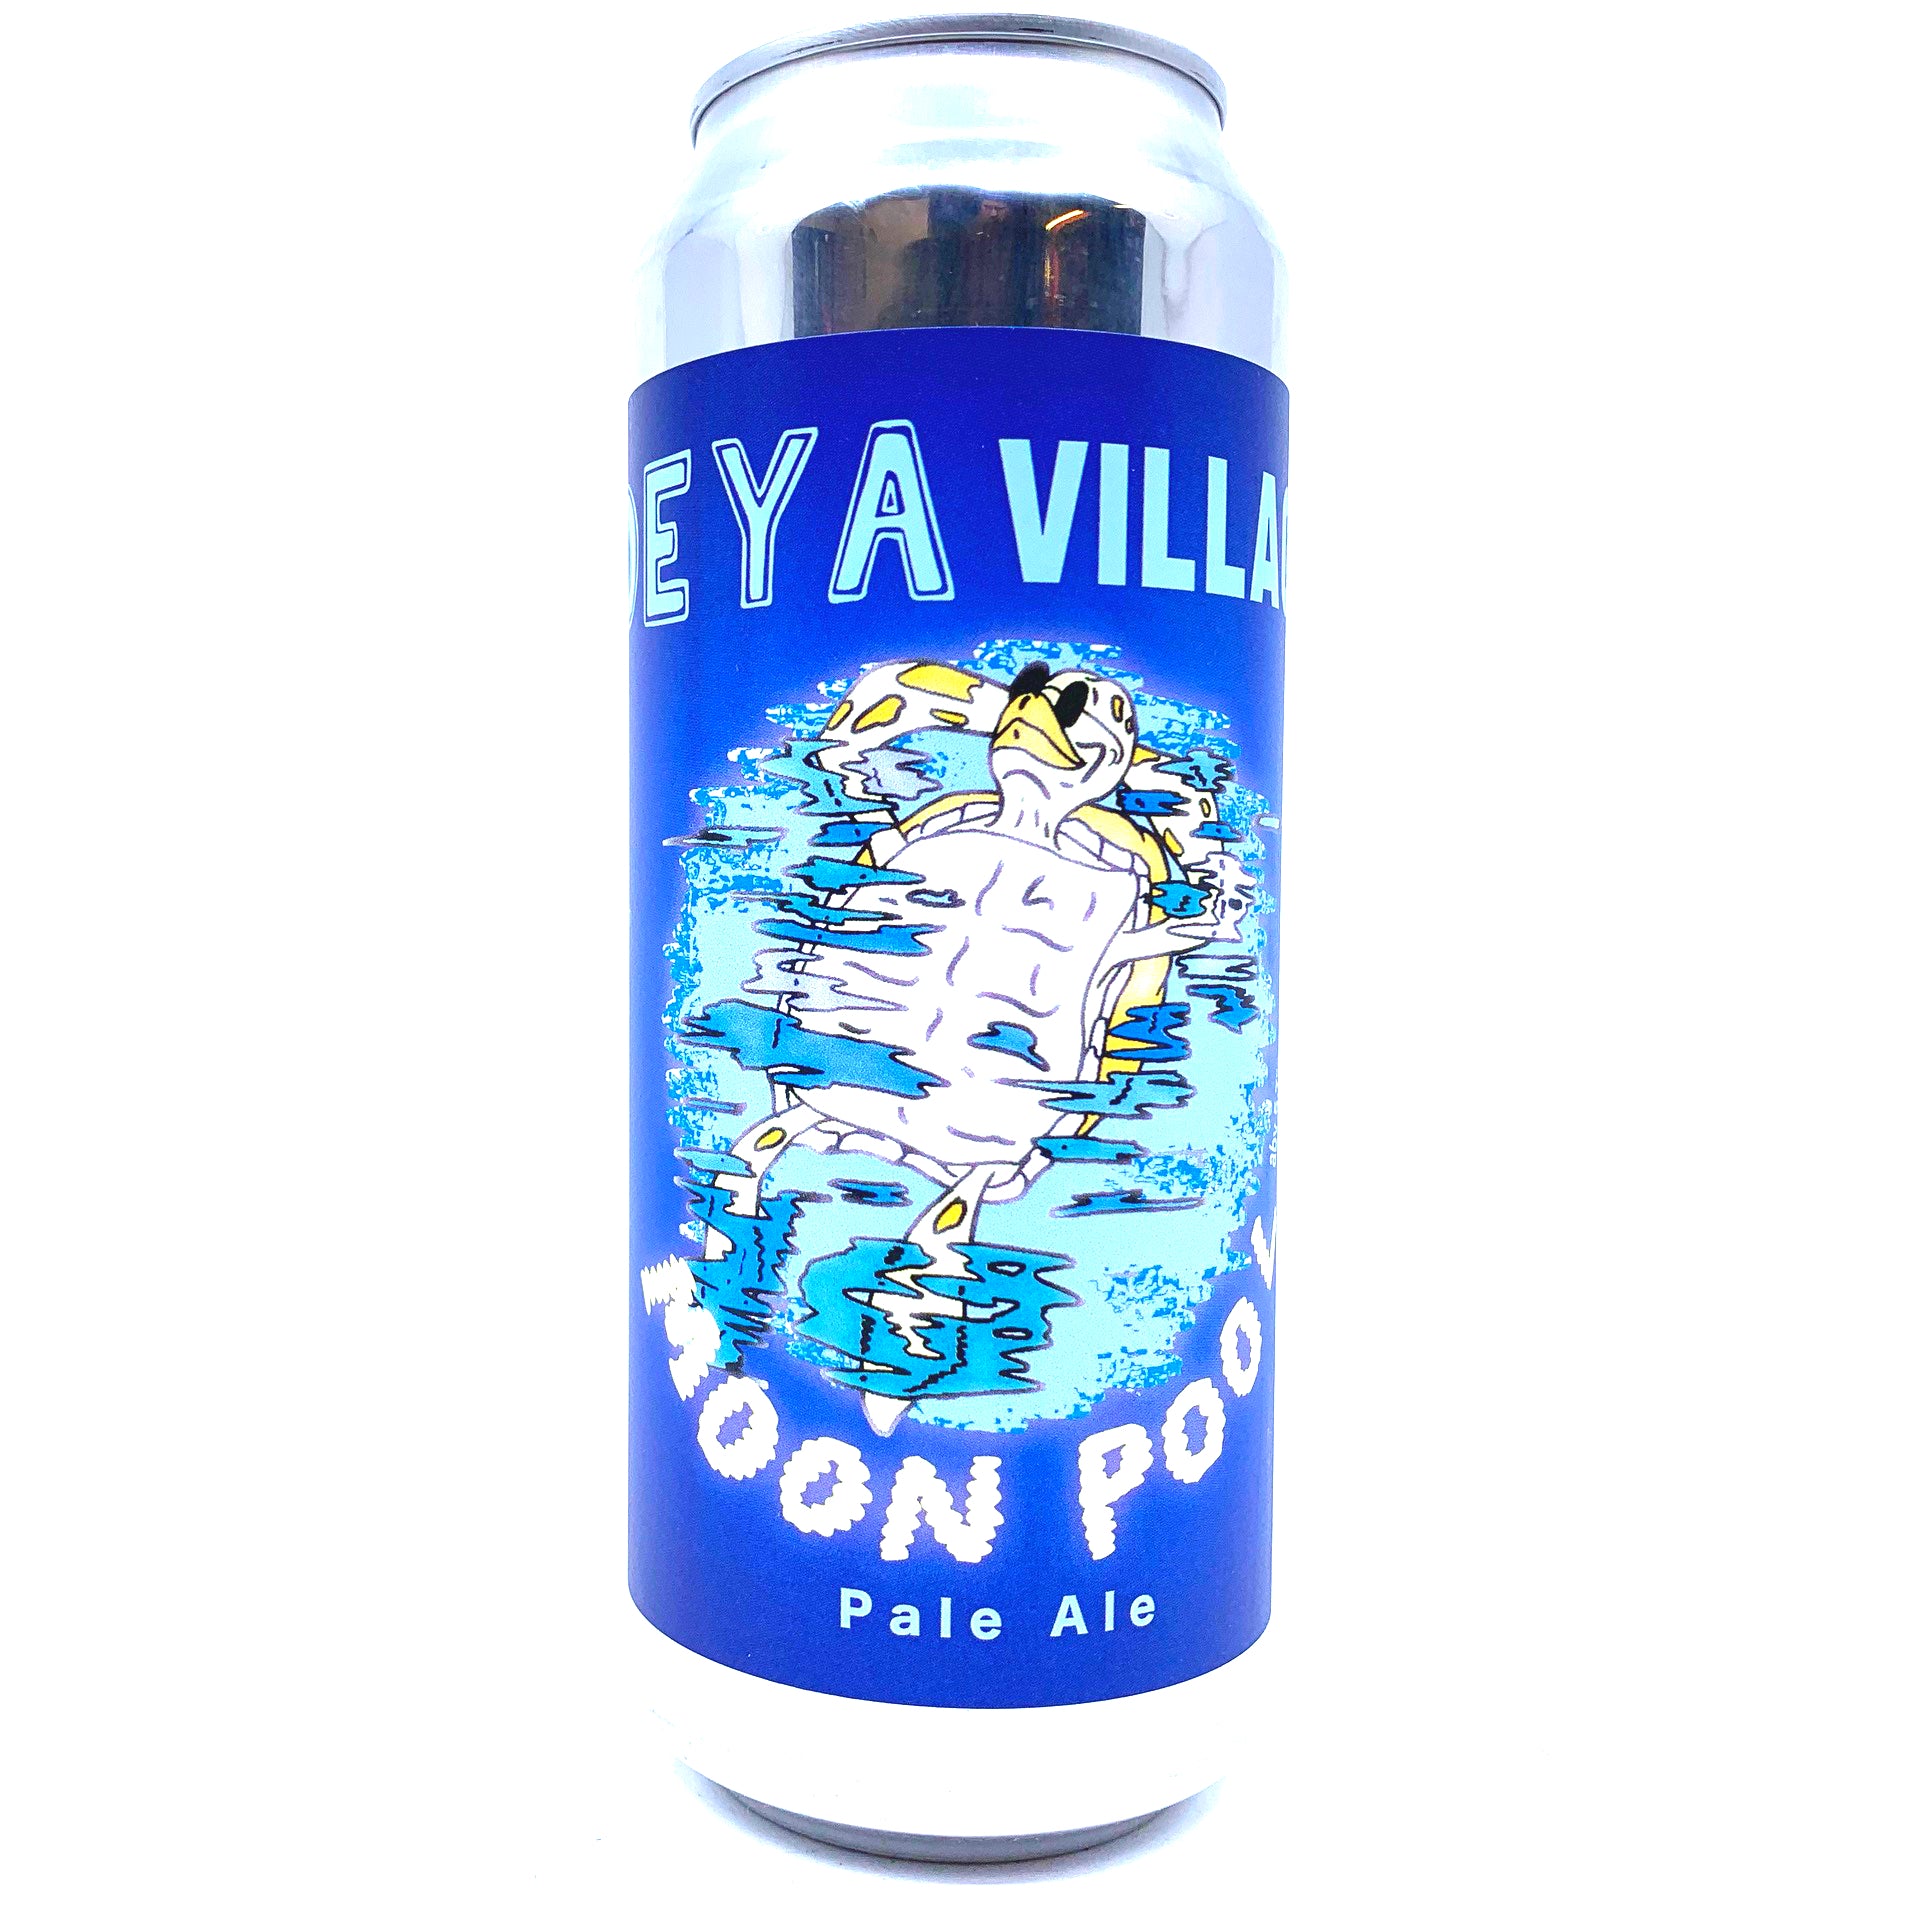 DEYA x Villages Moon Pool Pale Ale 5.7% (500ml can)-Hop Burns & Black